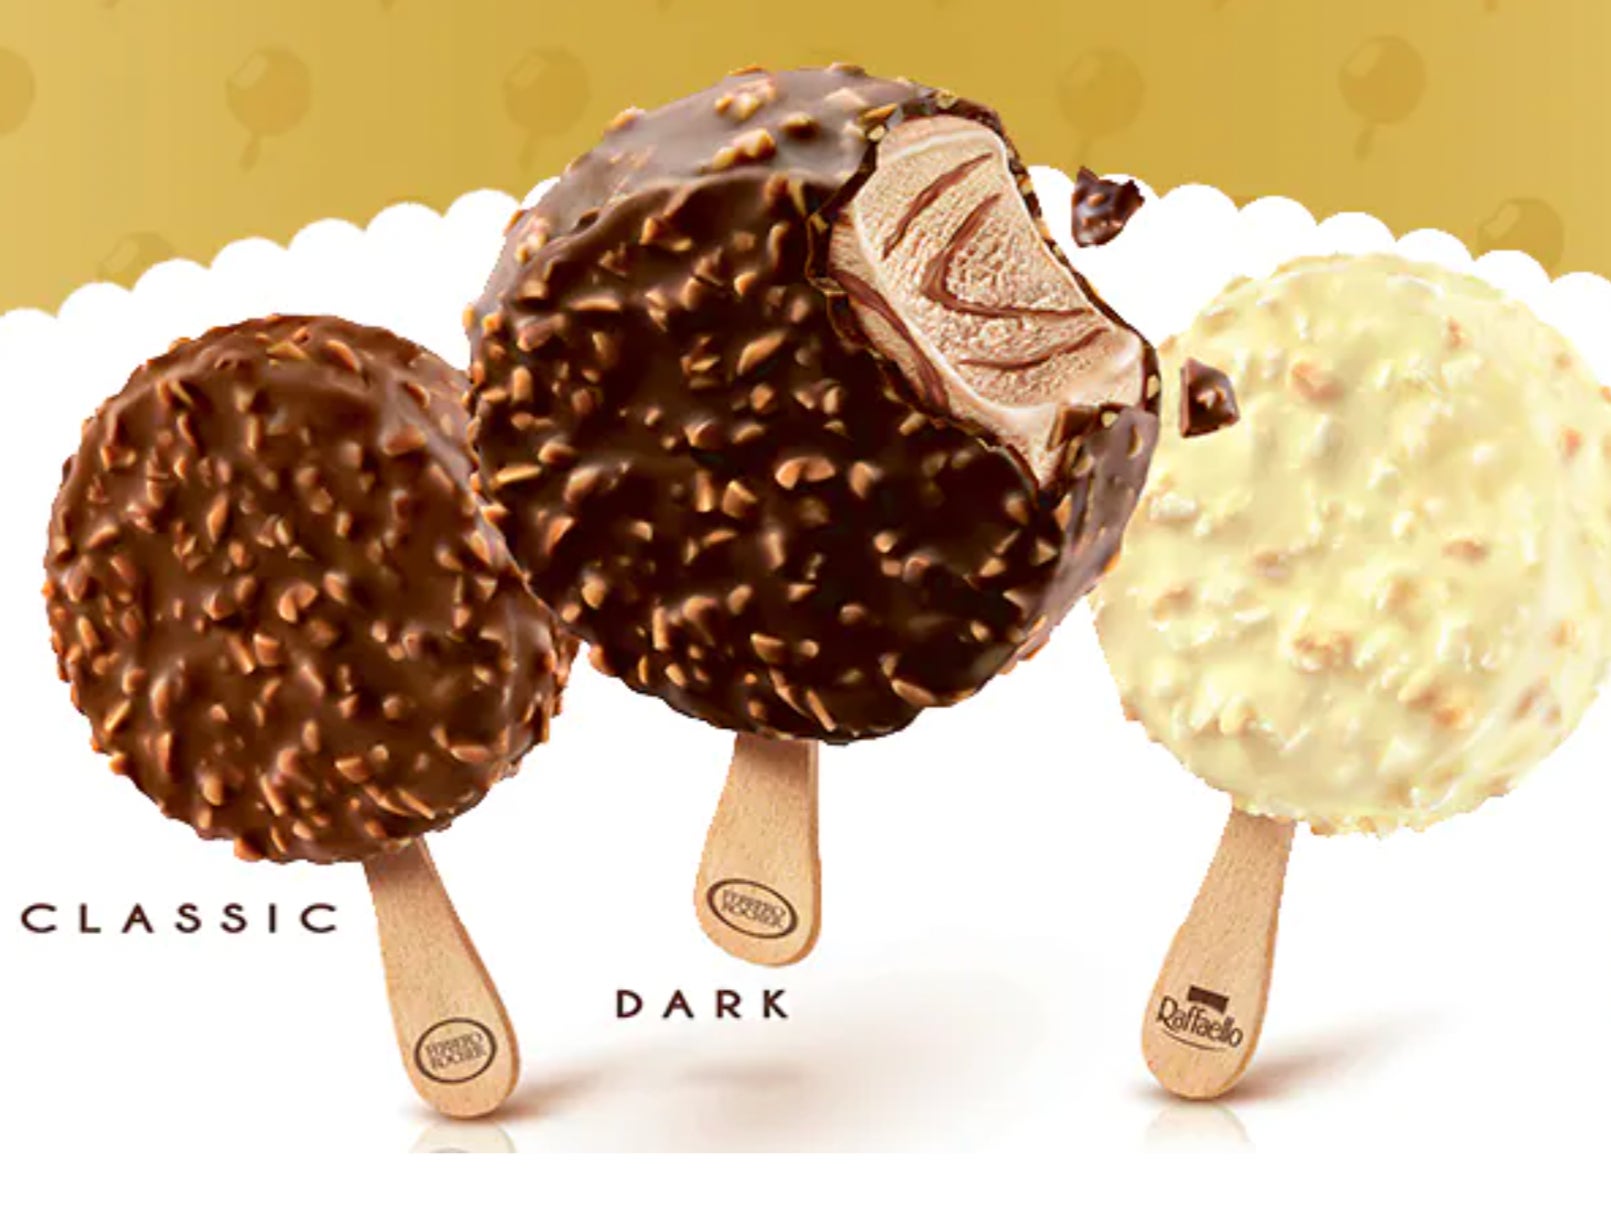 Ferrero Rocher ice cream sticks are coming to the UK for summer